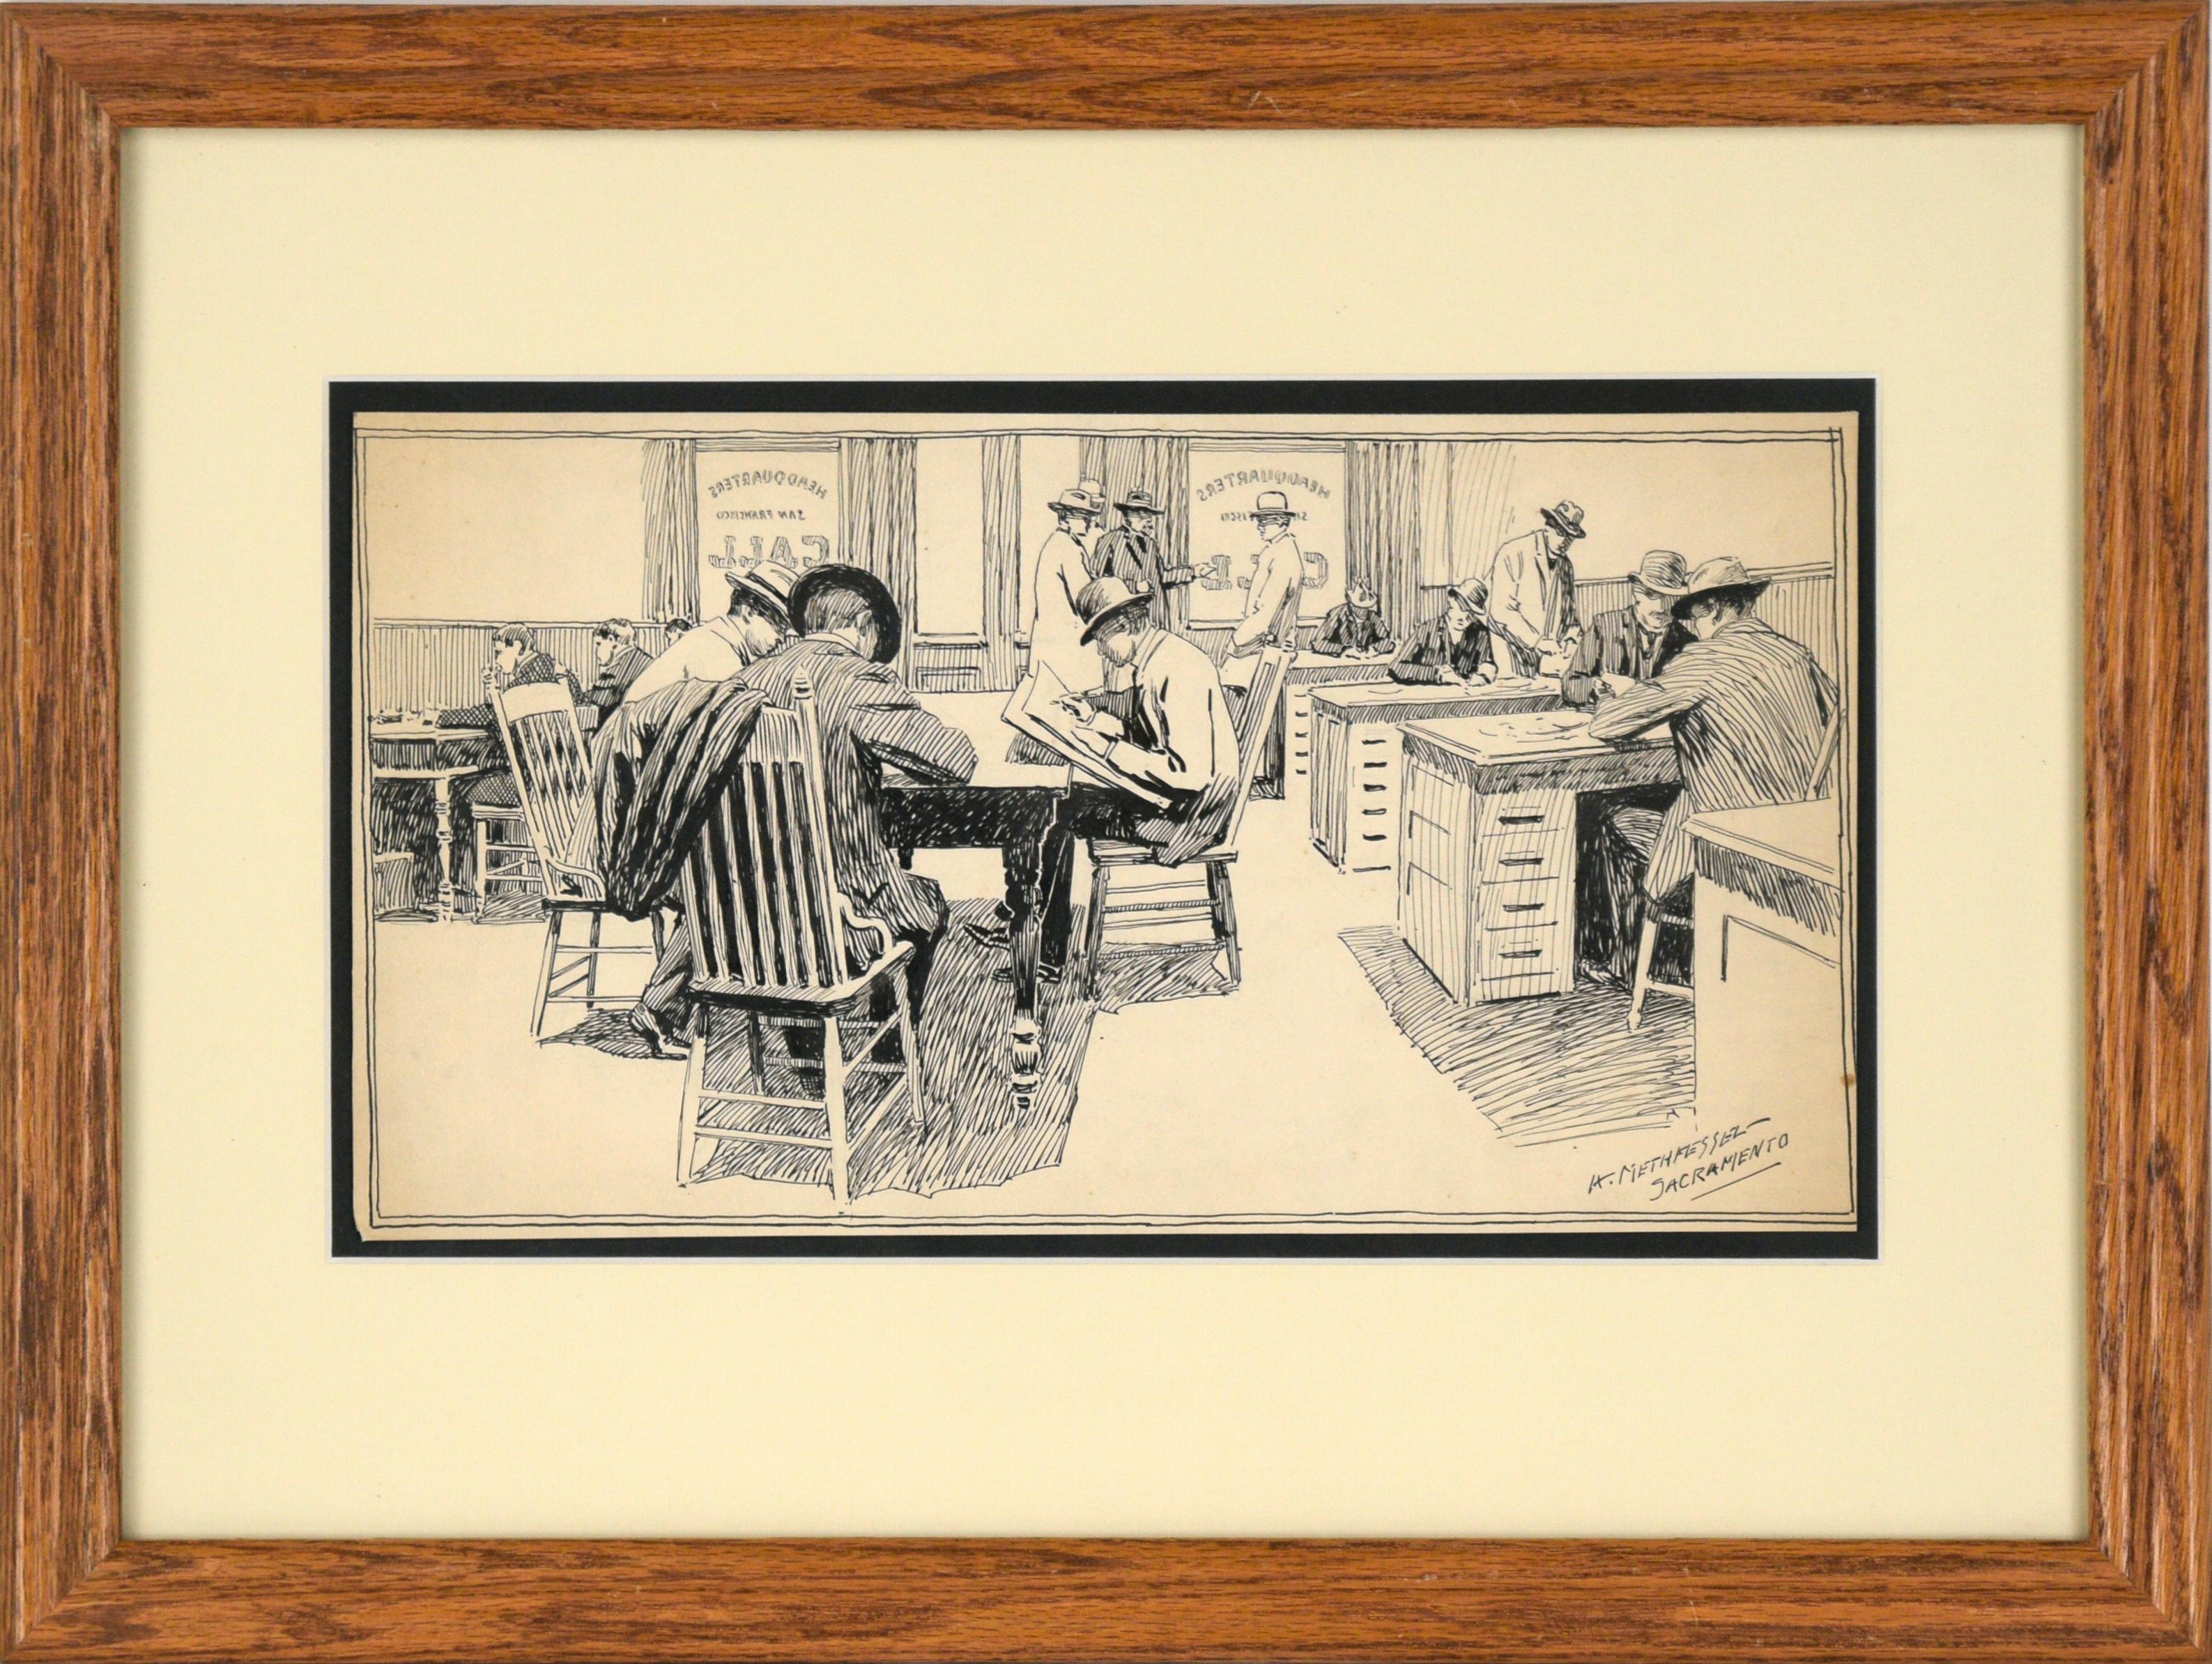 Interior Art Adolph Methfessel - The Illustrator's Workroom at The San Francisco Call (L'atelier d'illustrateur au San Francisco Call), fin du 19e siècle Illustration